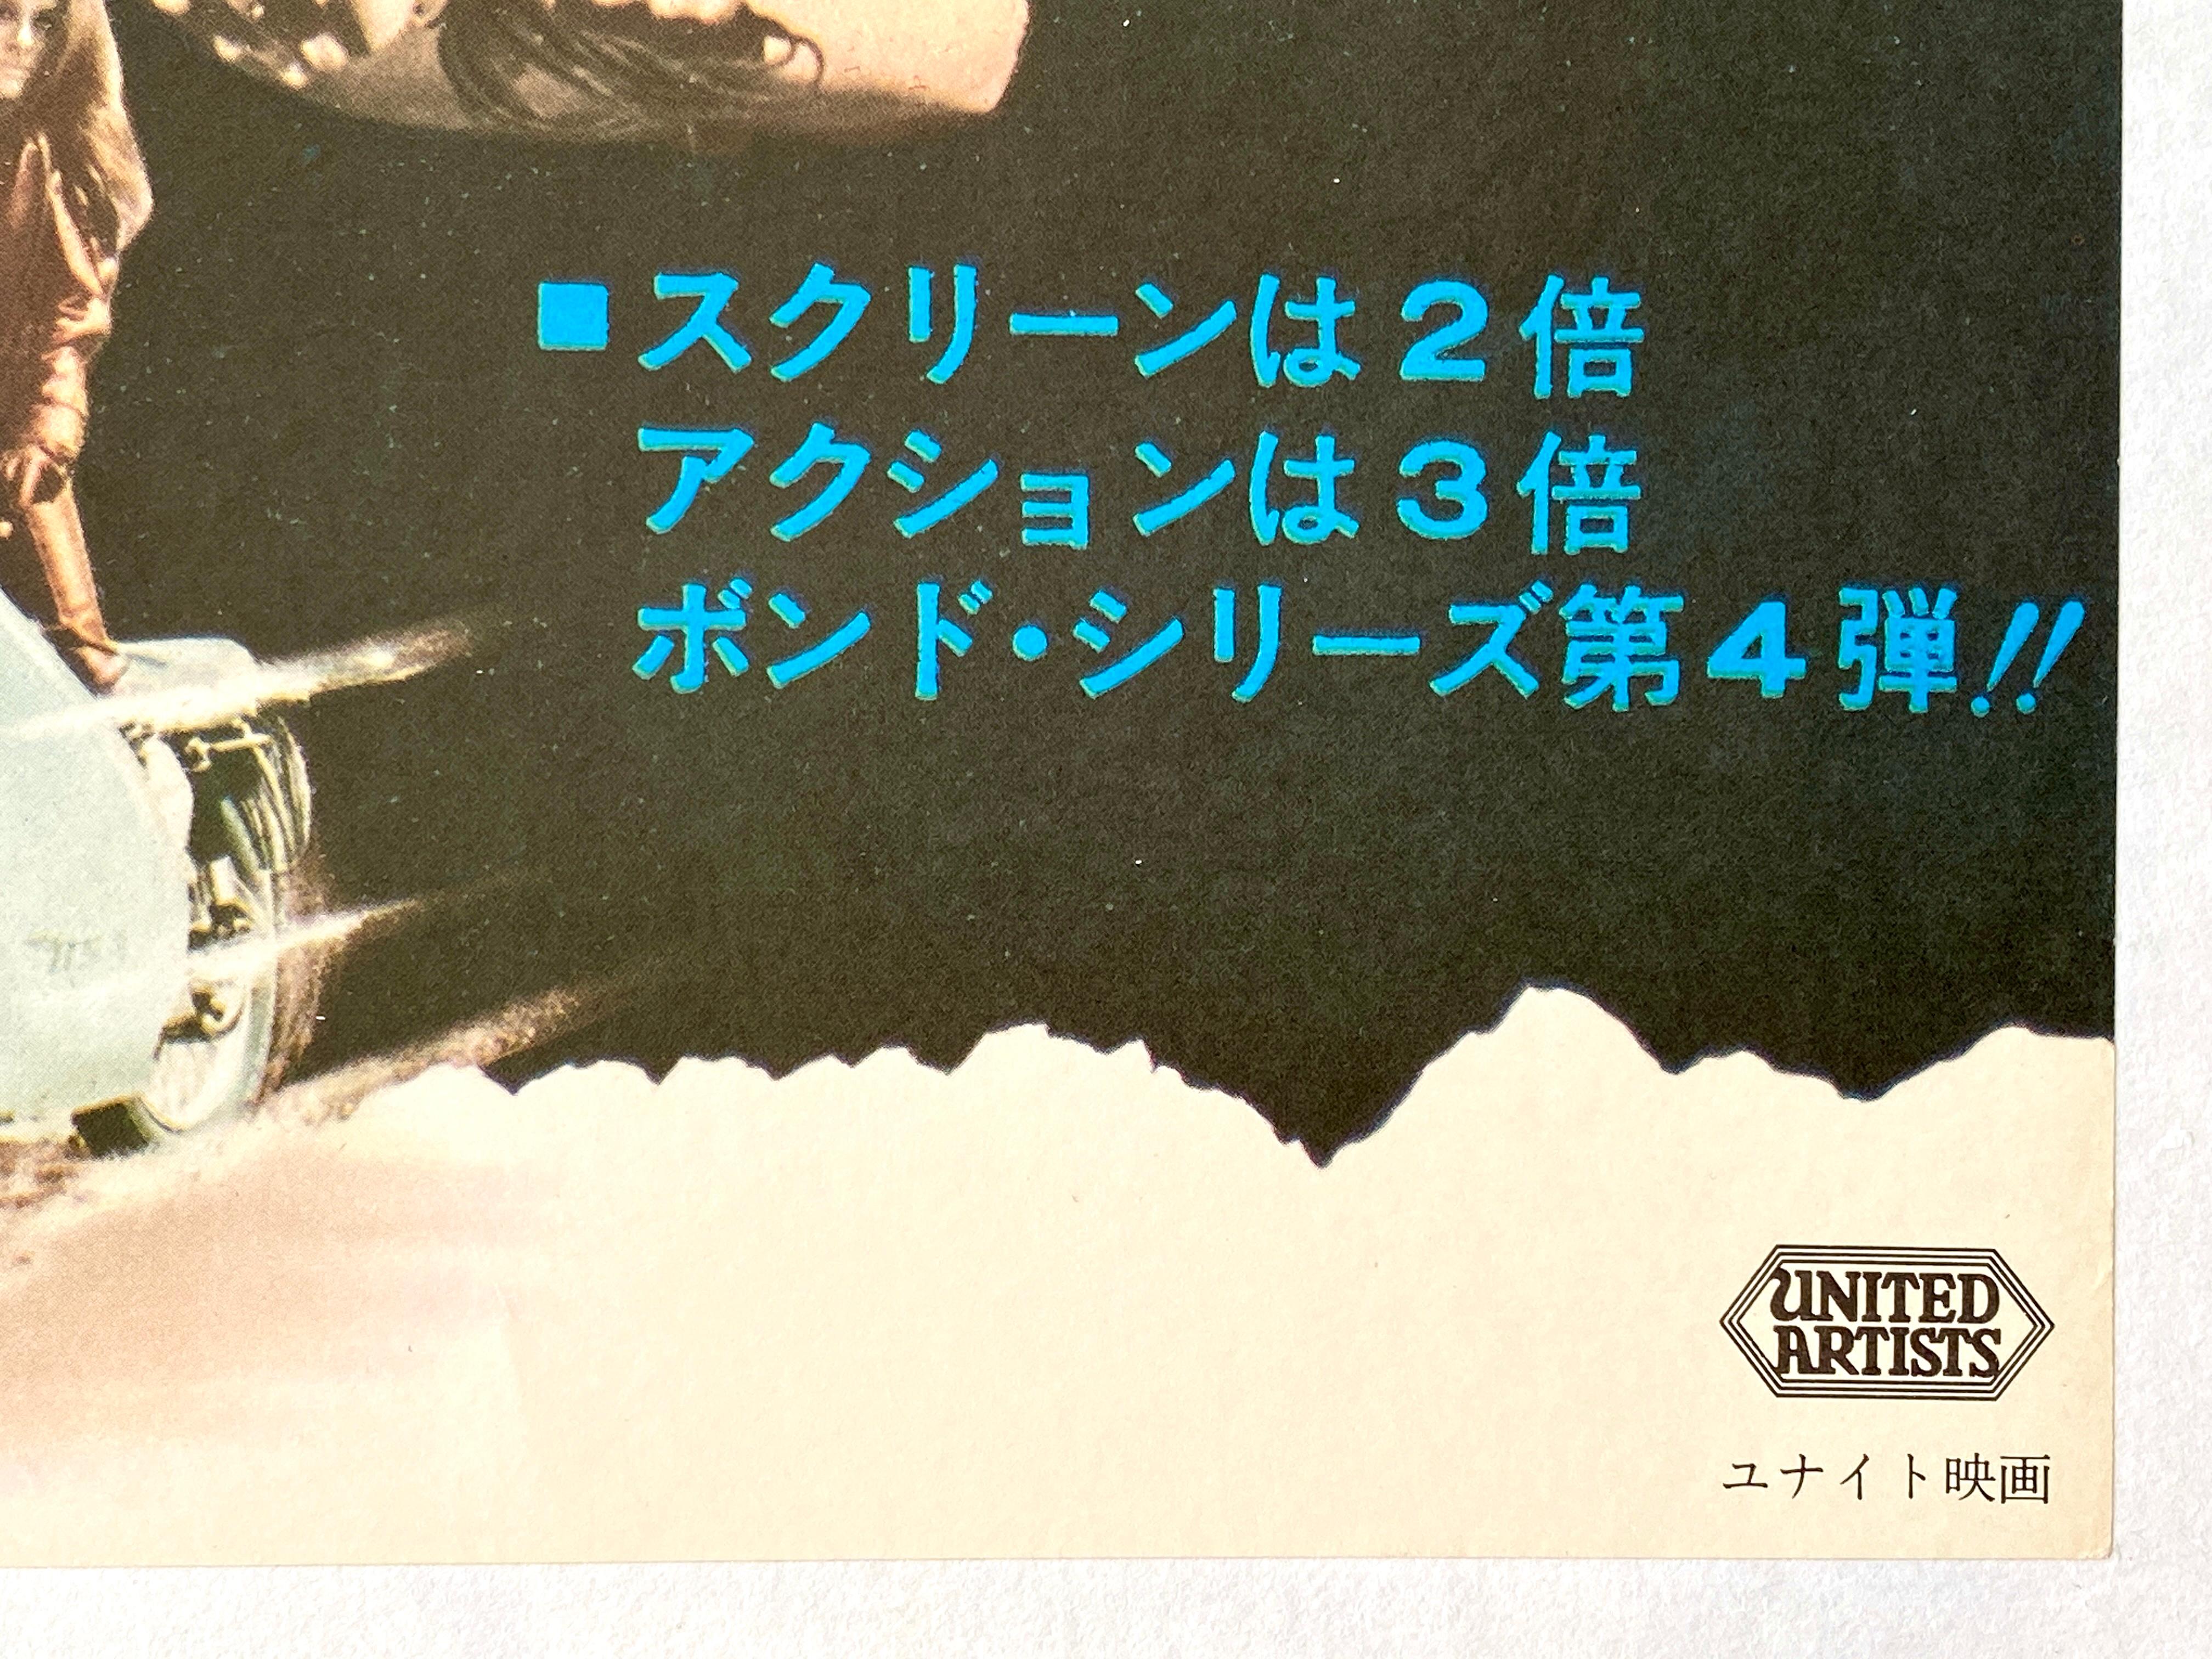 James Bond 'Thunderball' Original Vintage Movie Poster, Japanese, 1965 For Sale 1